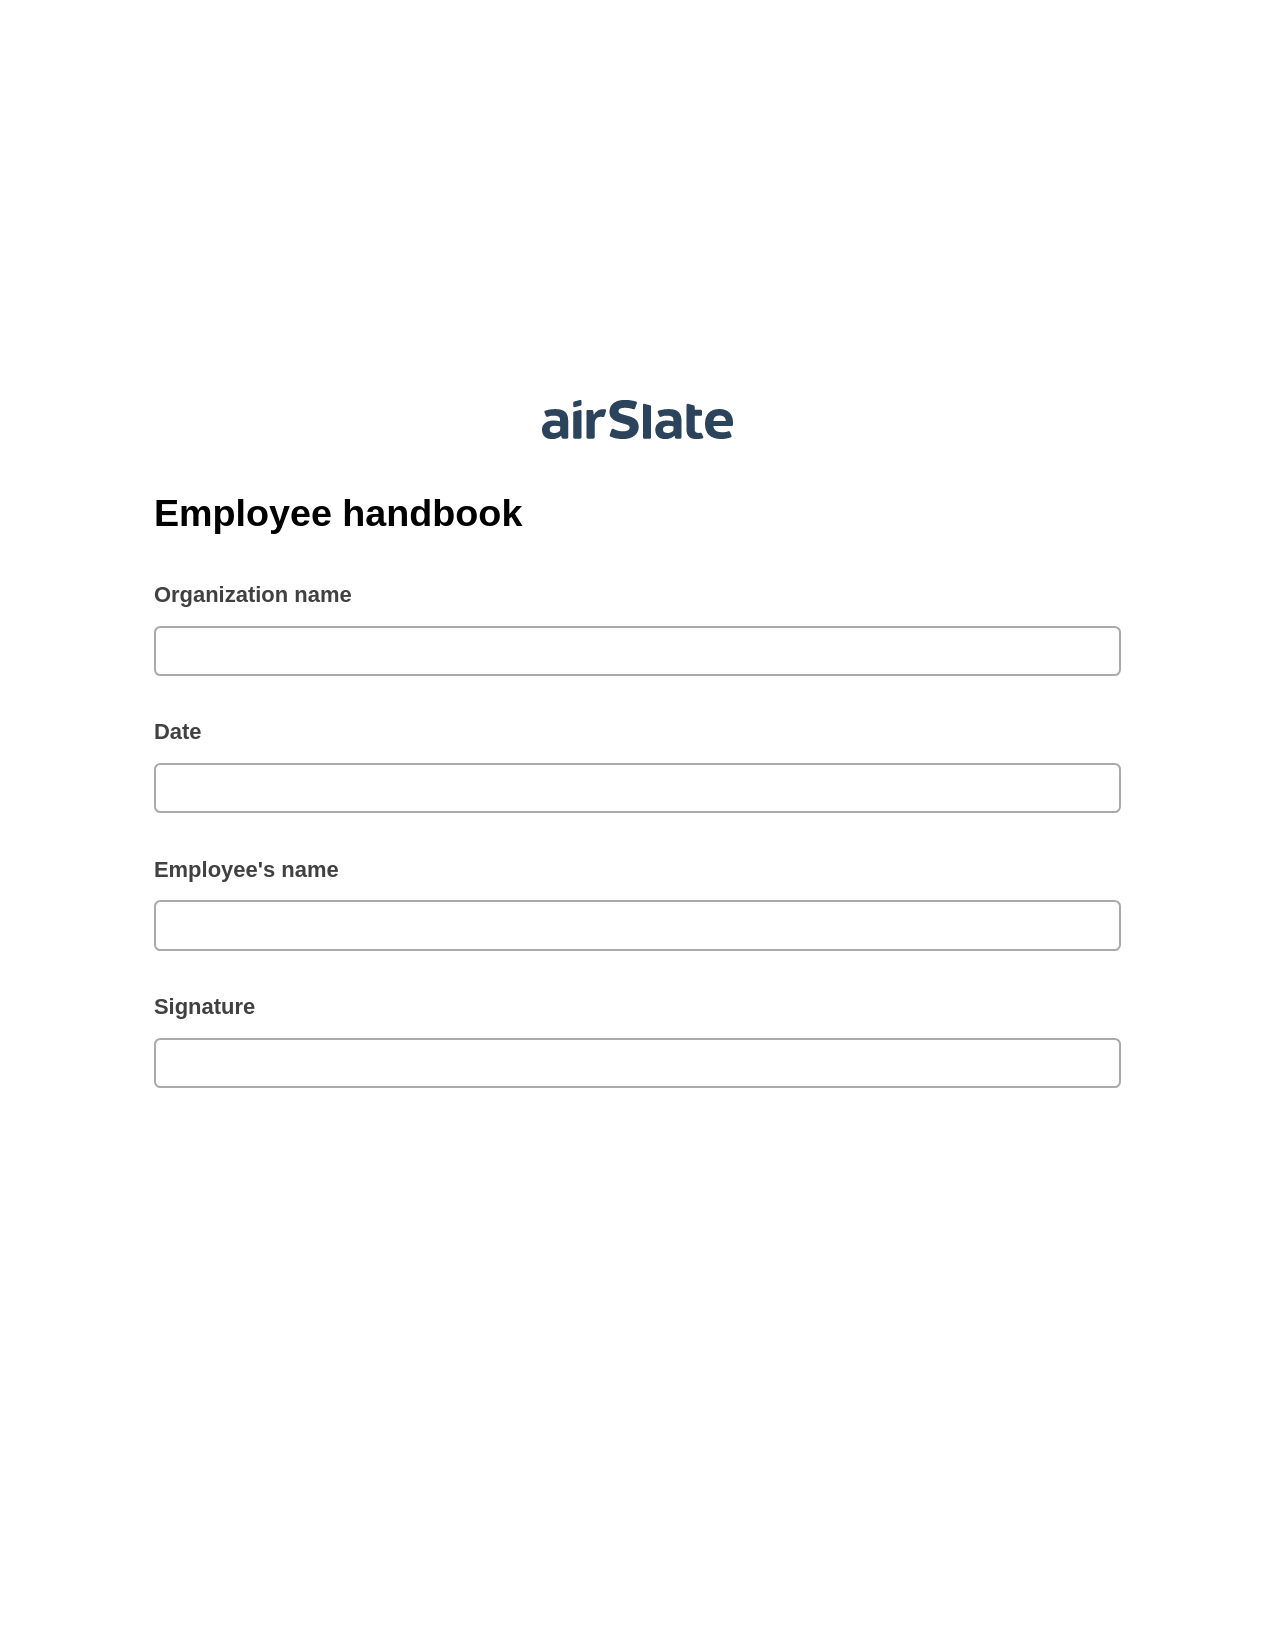 Employee handbook Pre-fill from Excel Spreadsheet Bot, Lock the slate bot, Box Bot